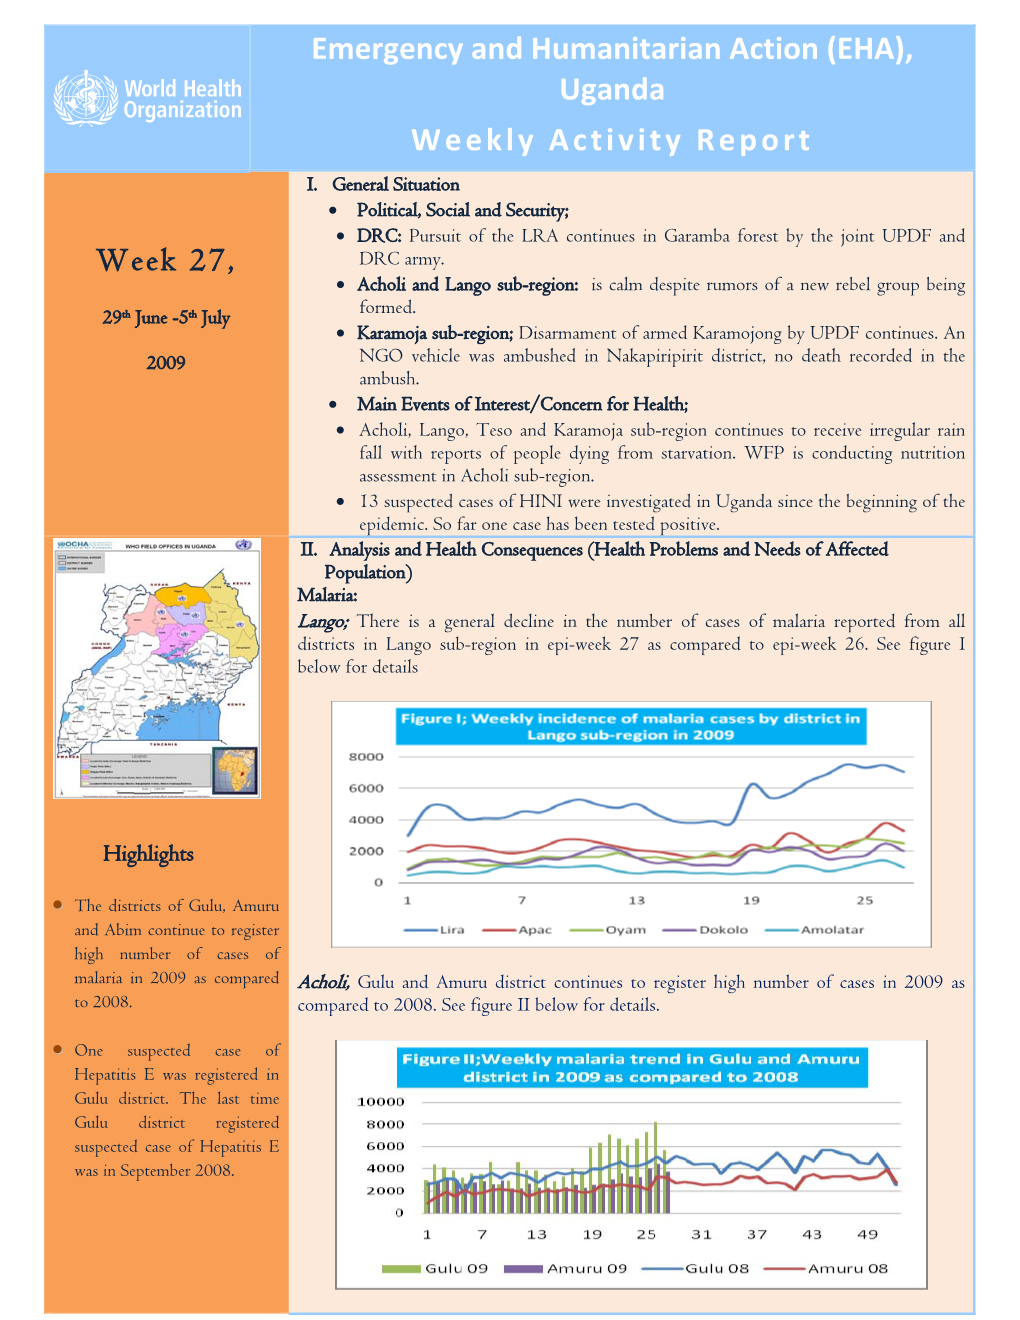 Emergency and Humanitarian Action (EHA), Uganda Weekly Activity